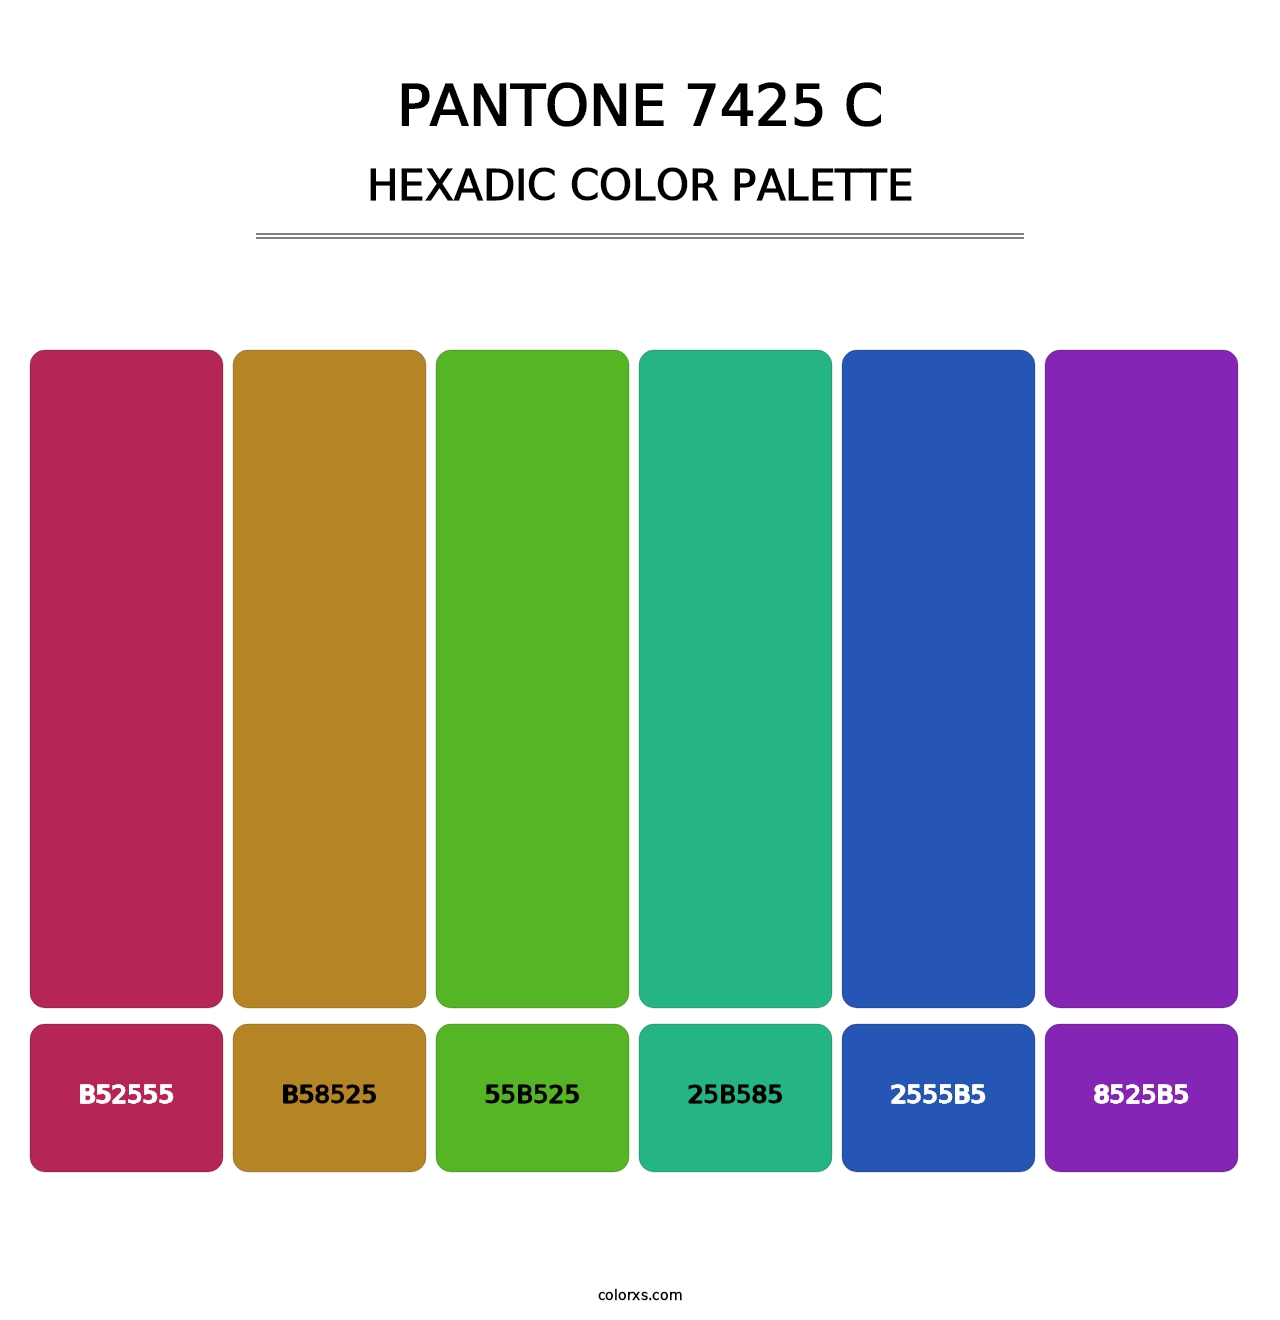 PANTONE 7425 C - Hexadic Color Palette